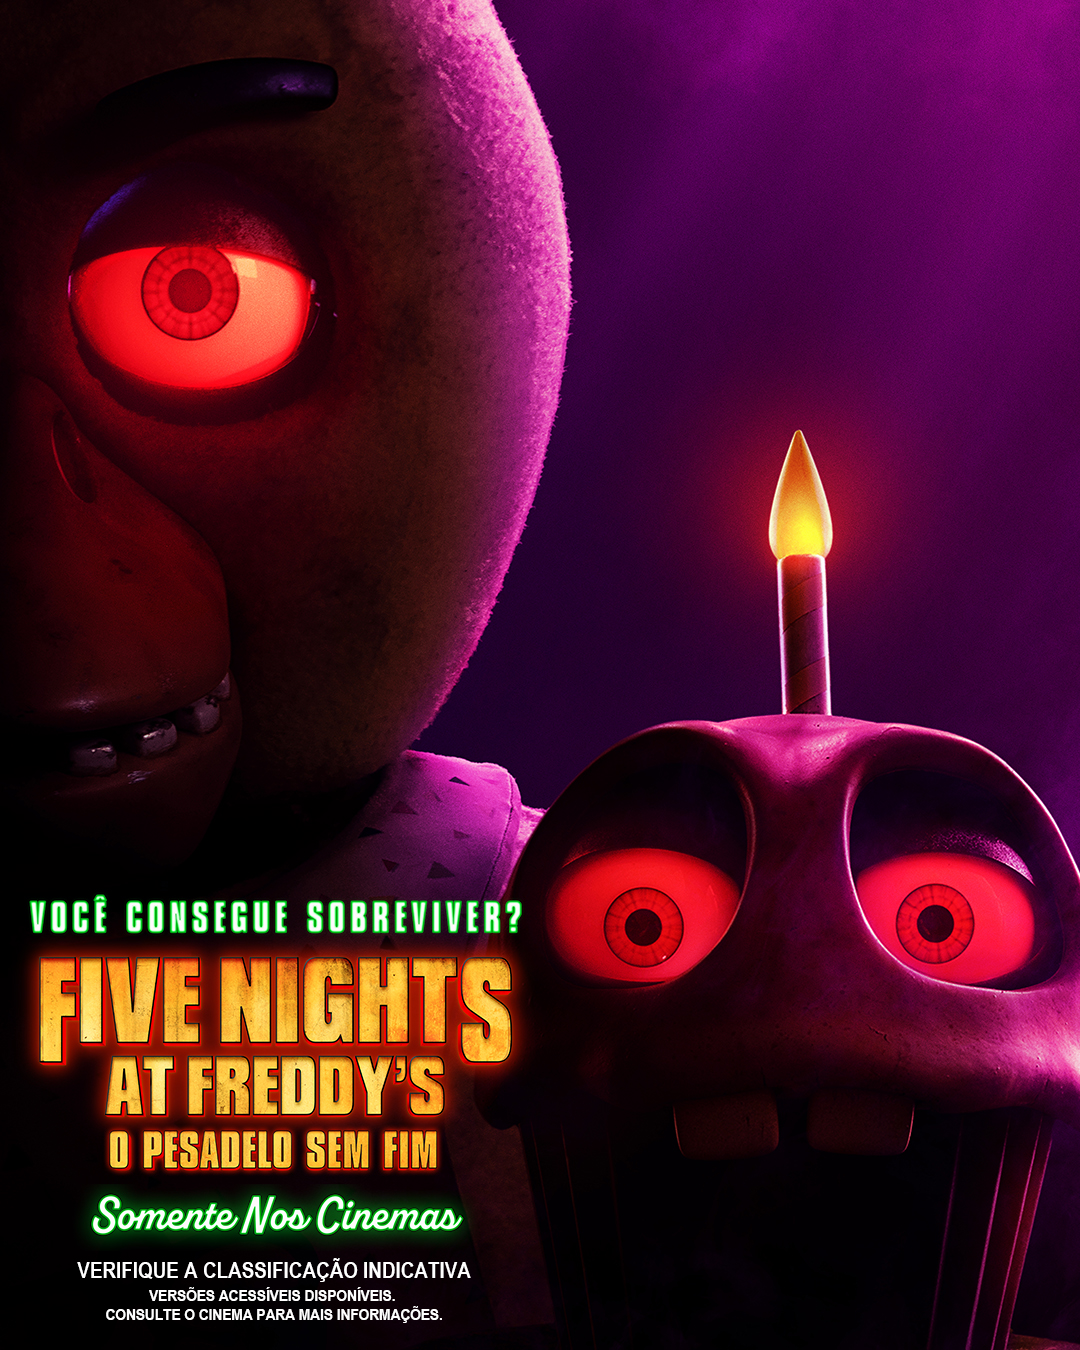 ♫ Freddy (Five Nights At Freddy's) - O Pesadelo sem fim